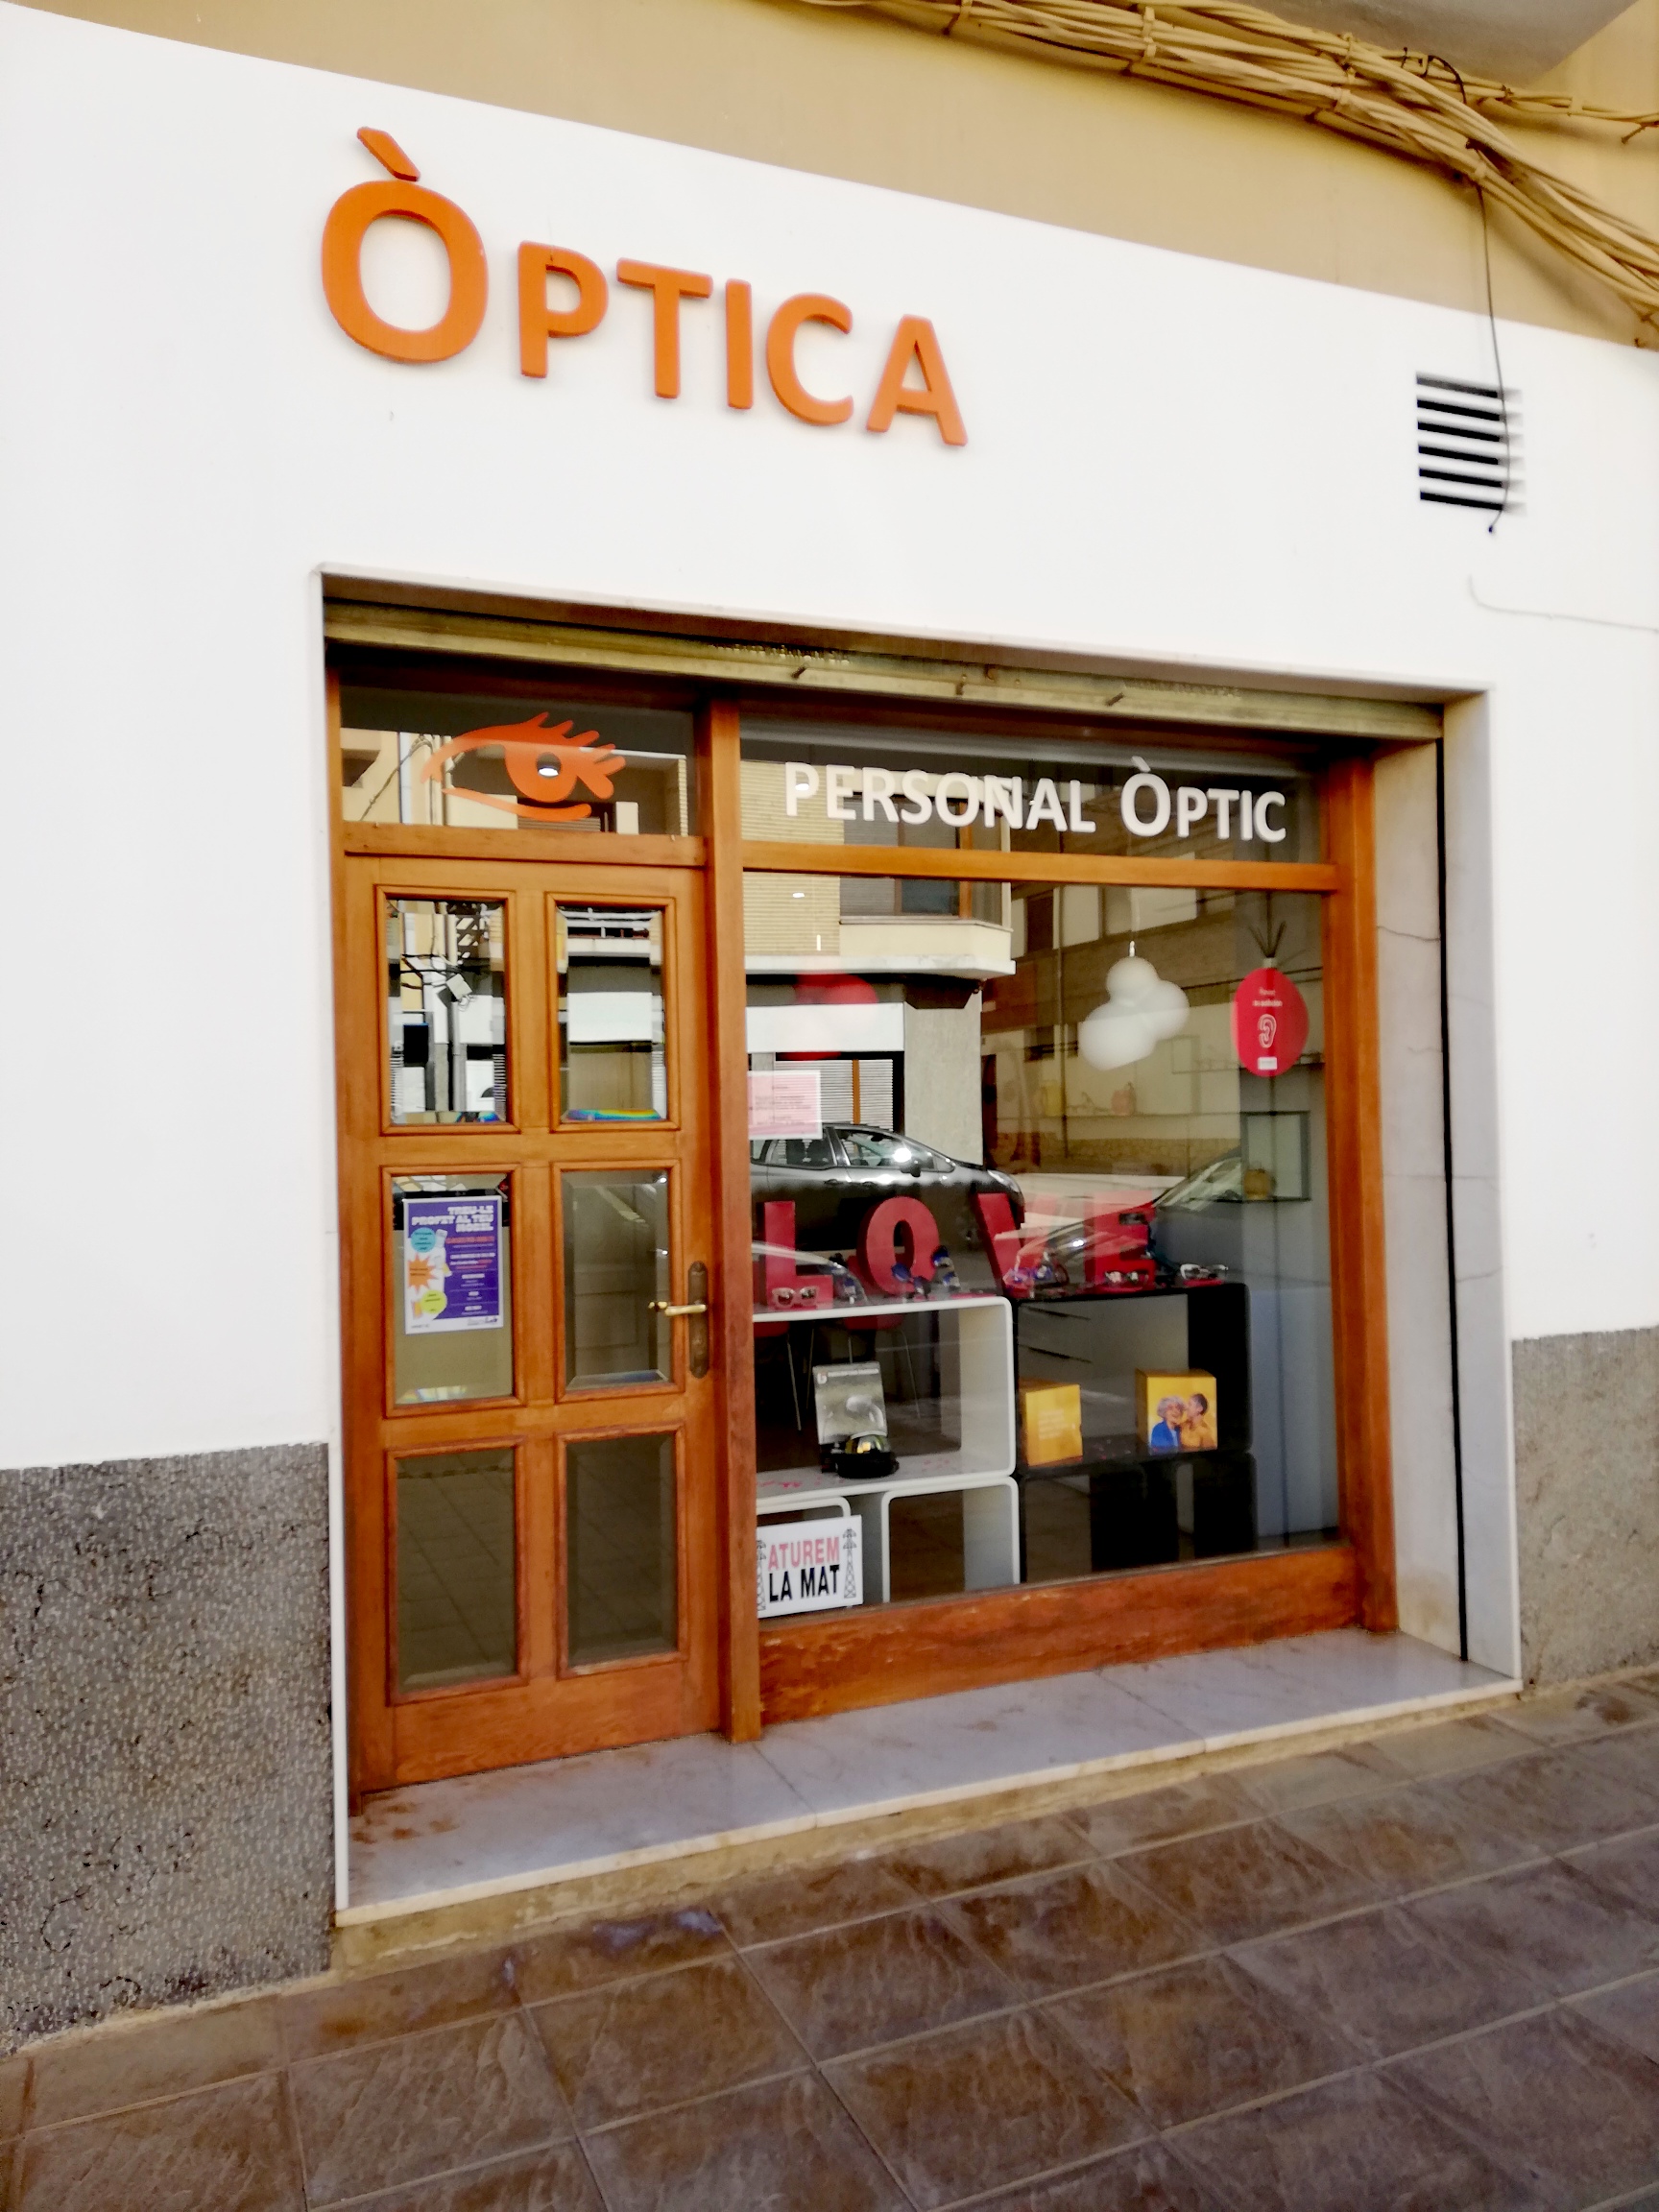 Personal Óptic